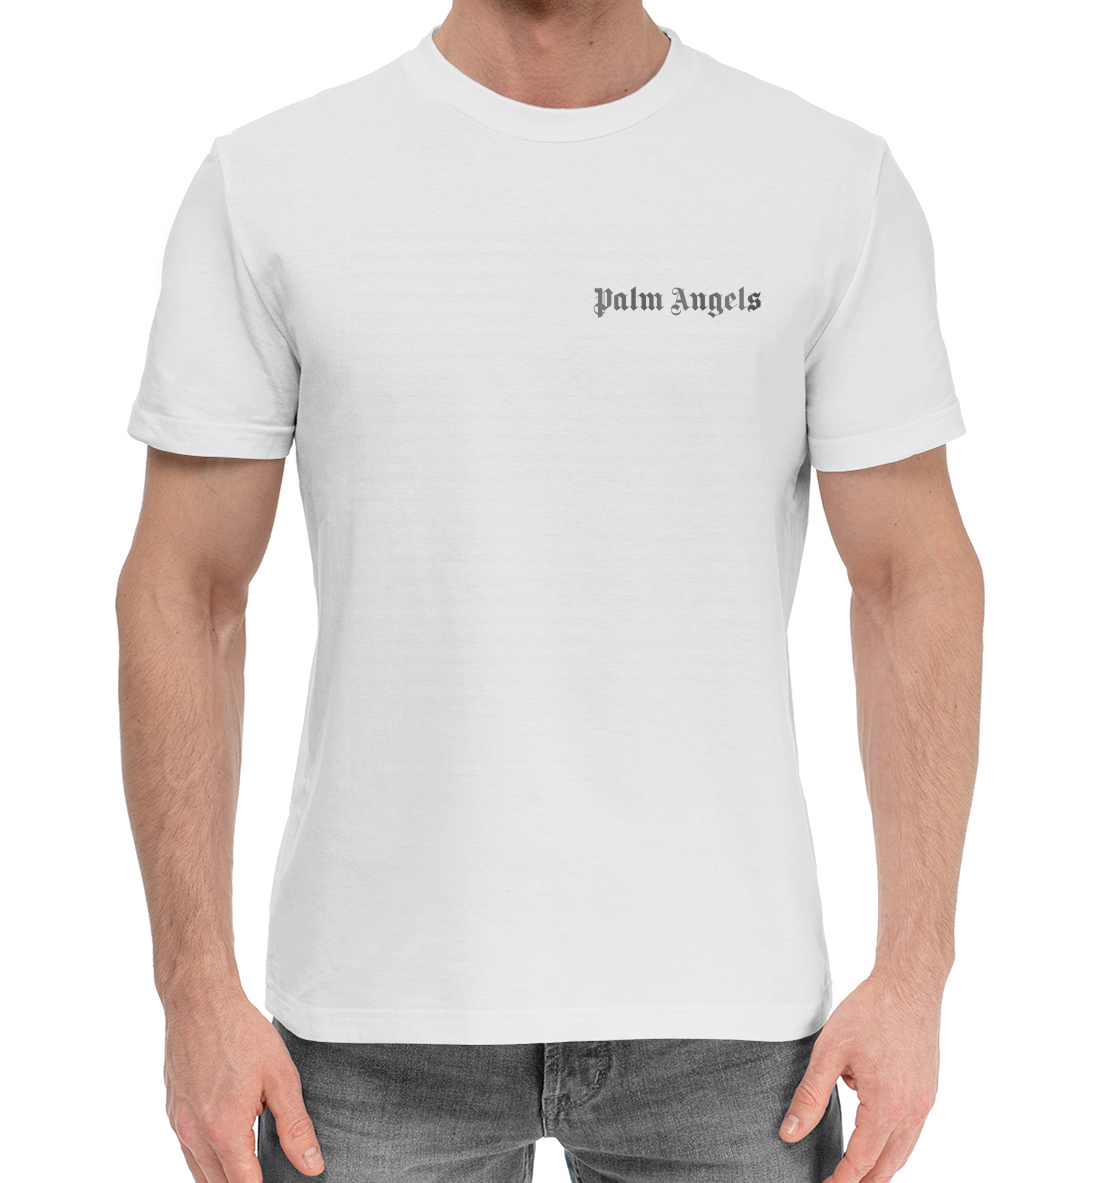 Мужская Хлопковая футболка с надписью Palm Angels, артикул PAG-242163-hfu-2mp